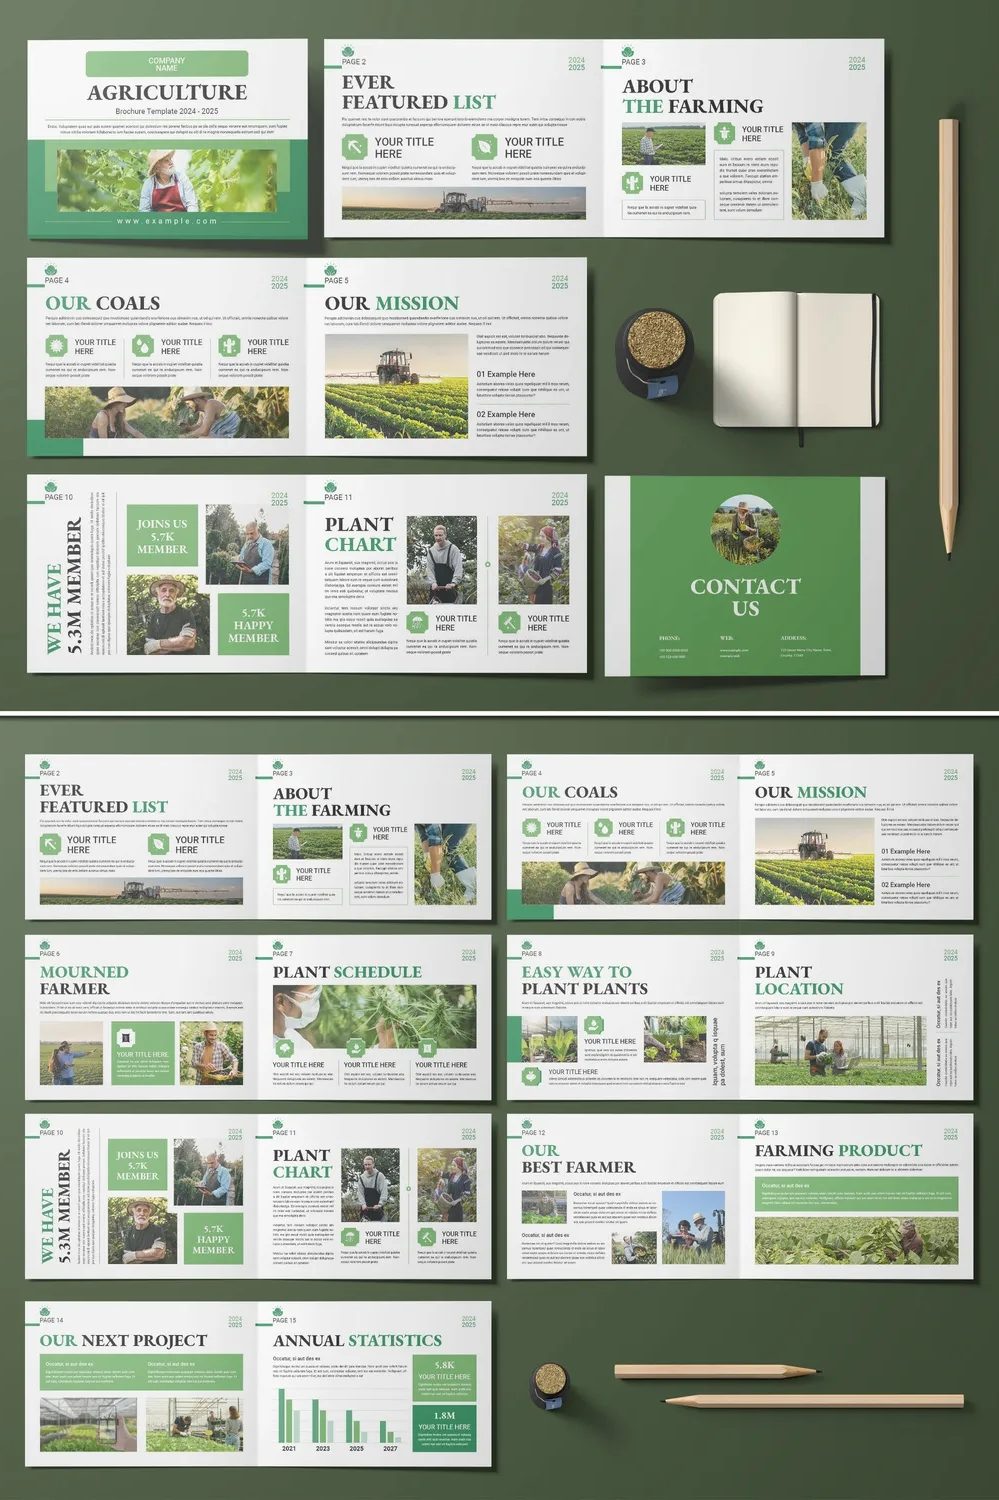 Adobestock - Agriculture Design Layout Brochure Template Landscape 716694205